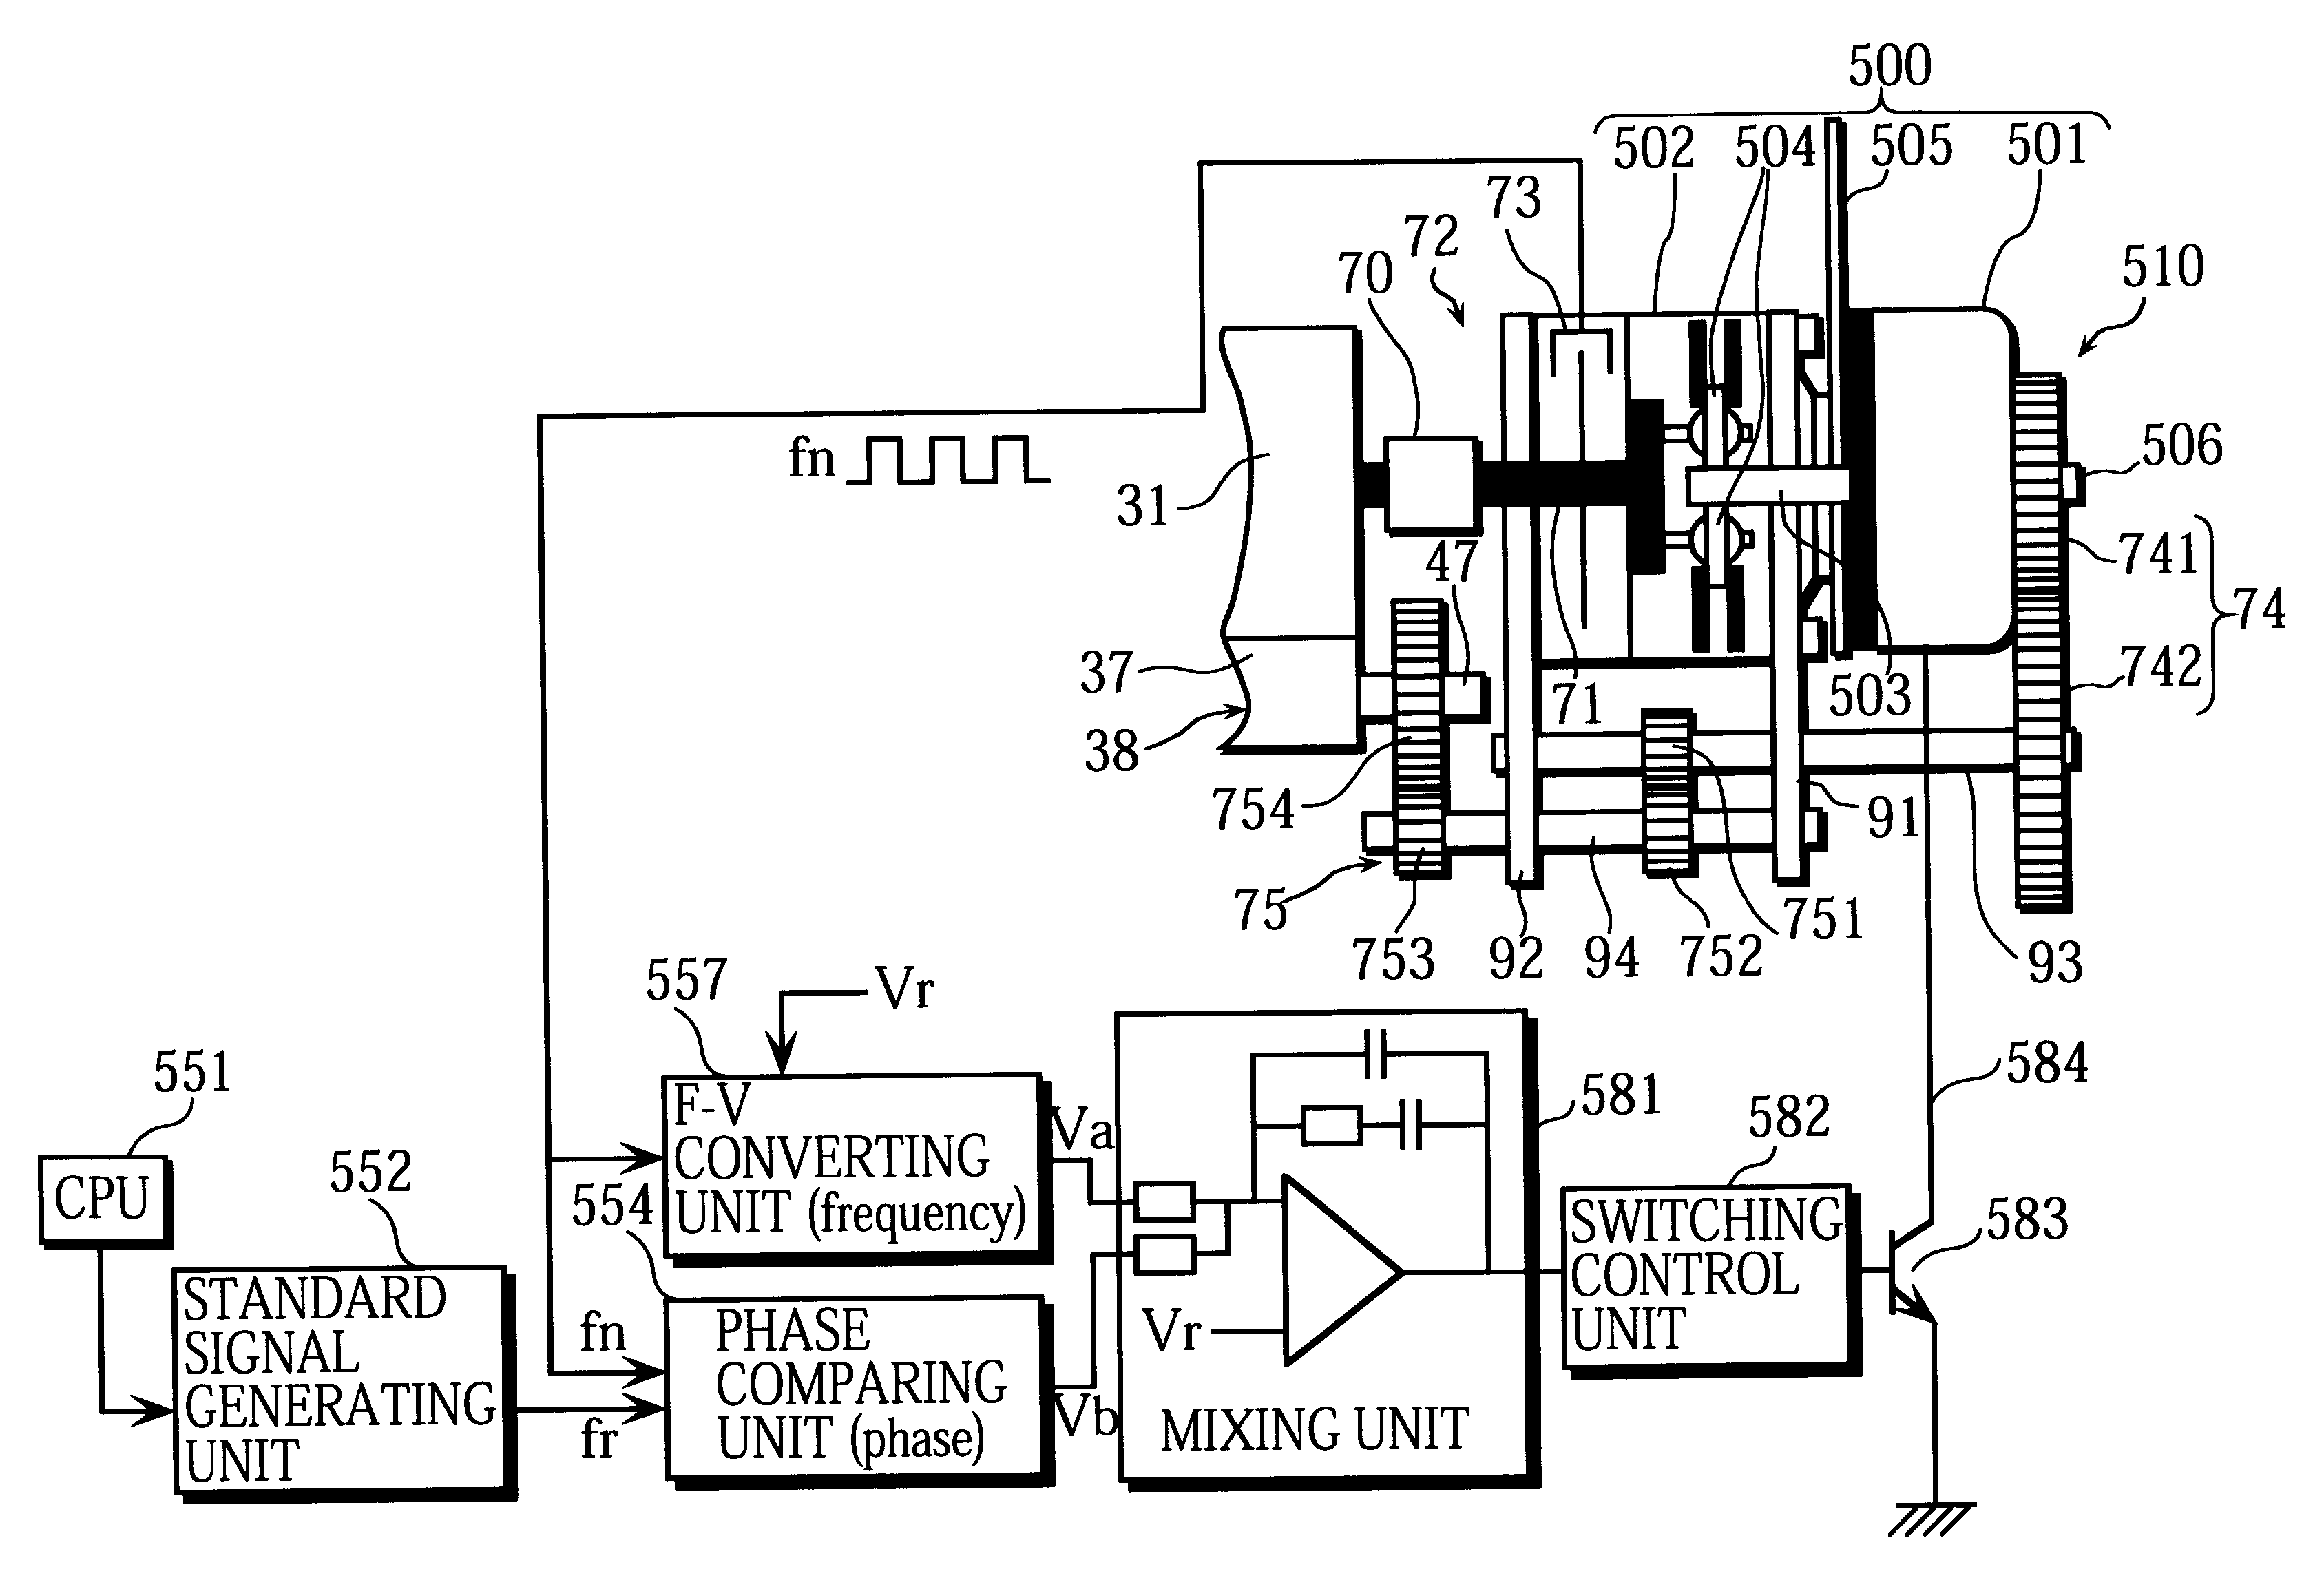 Rotator driving device, image forming apparatus using the rotator driving device, and method of driving rotator